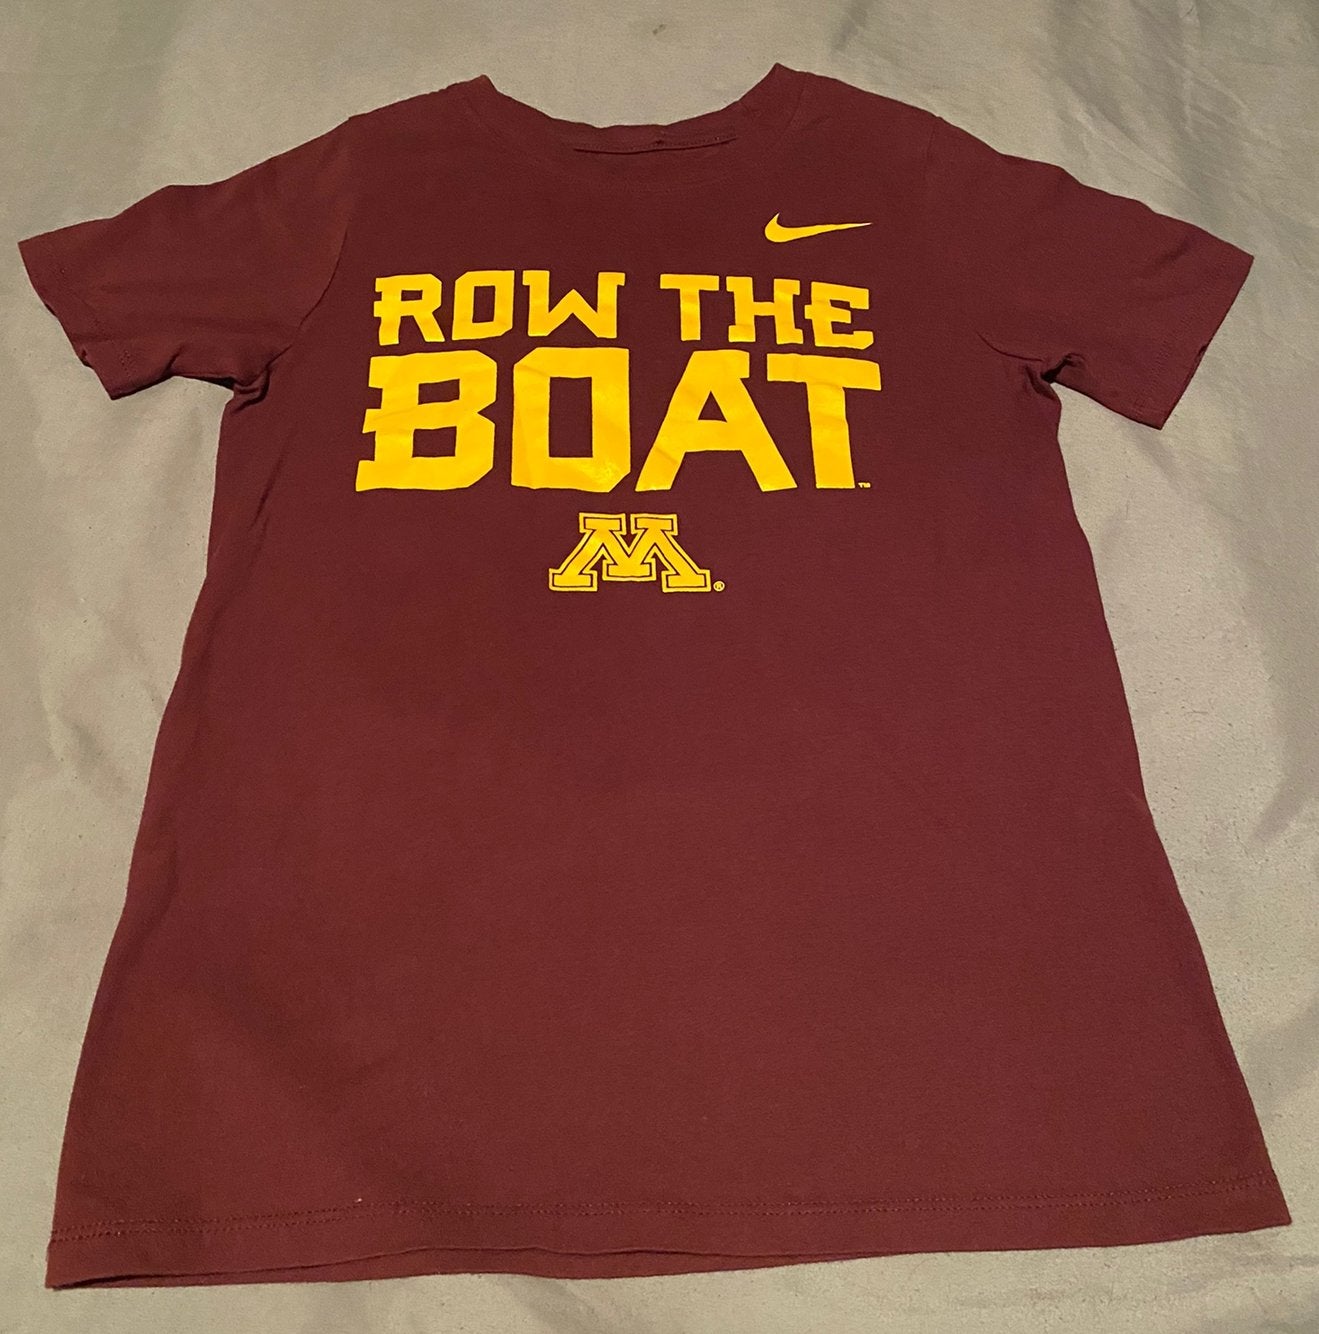 nike row the boat shirt